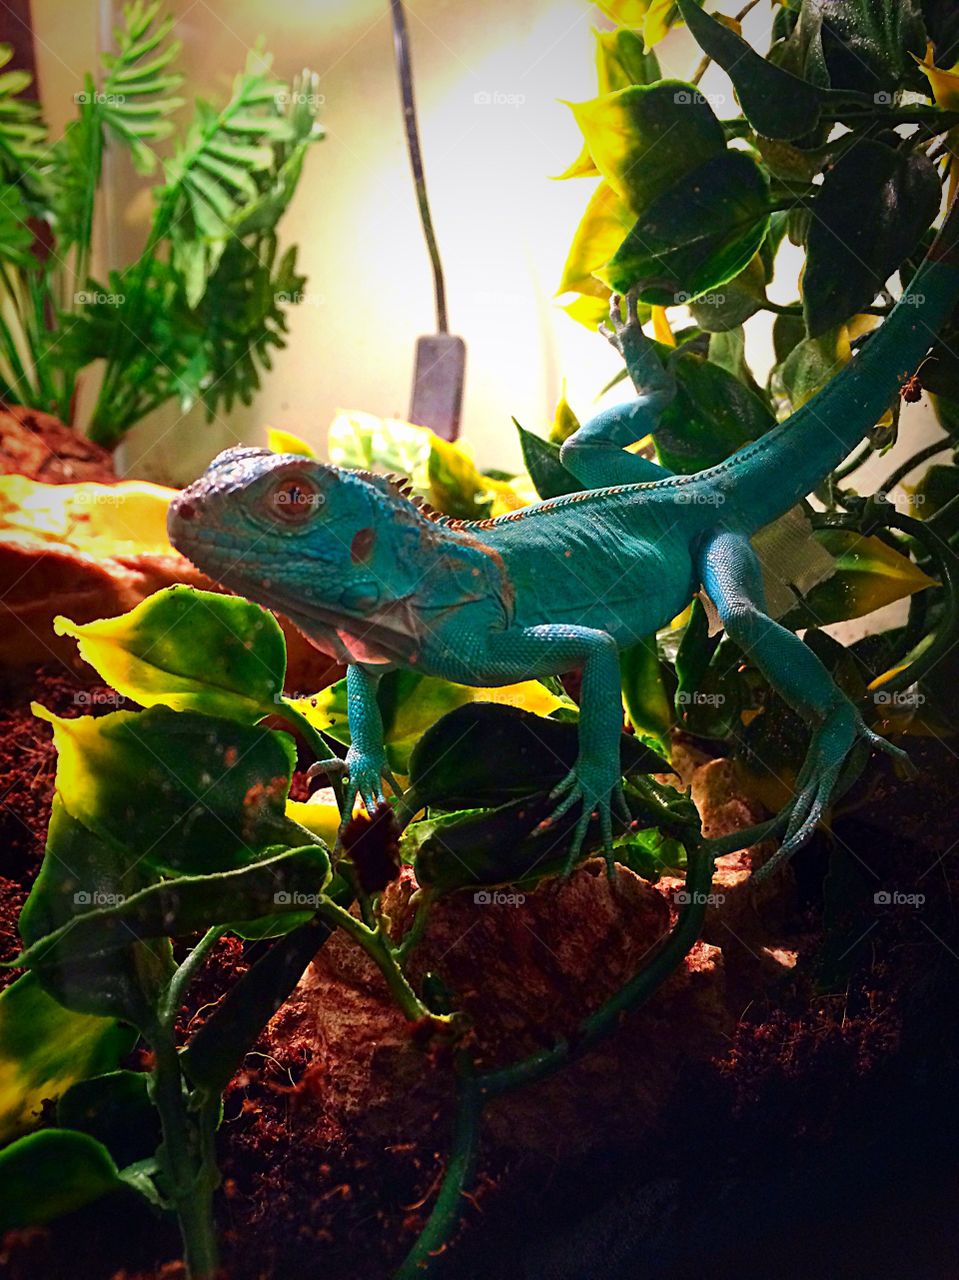 My Iguana, Zeus. Rare blue iguana